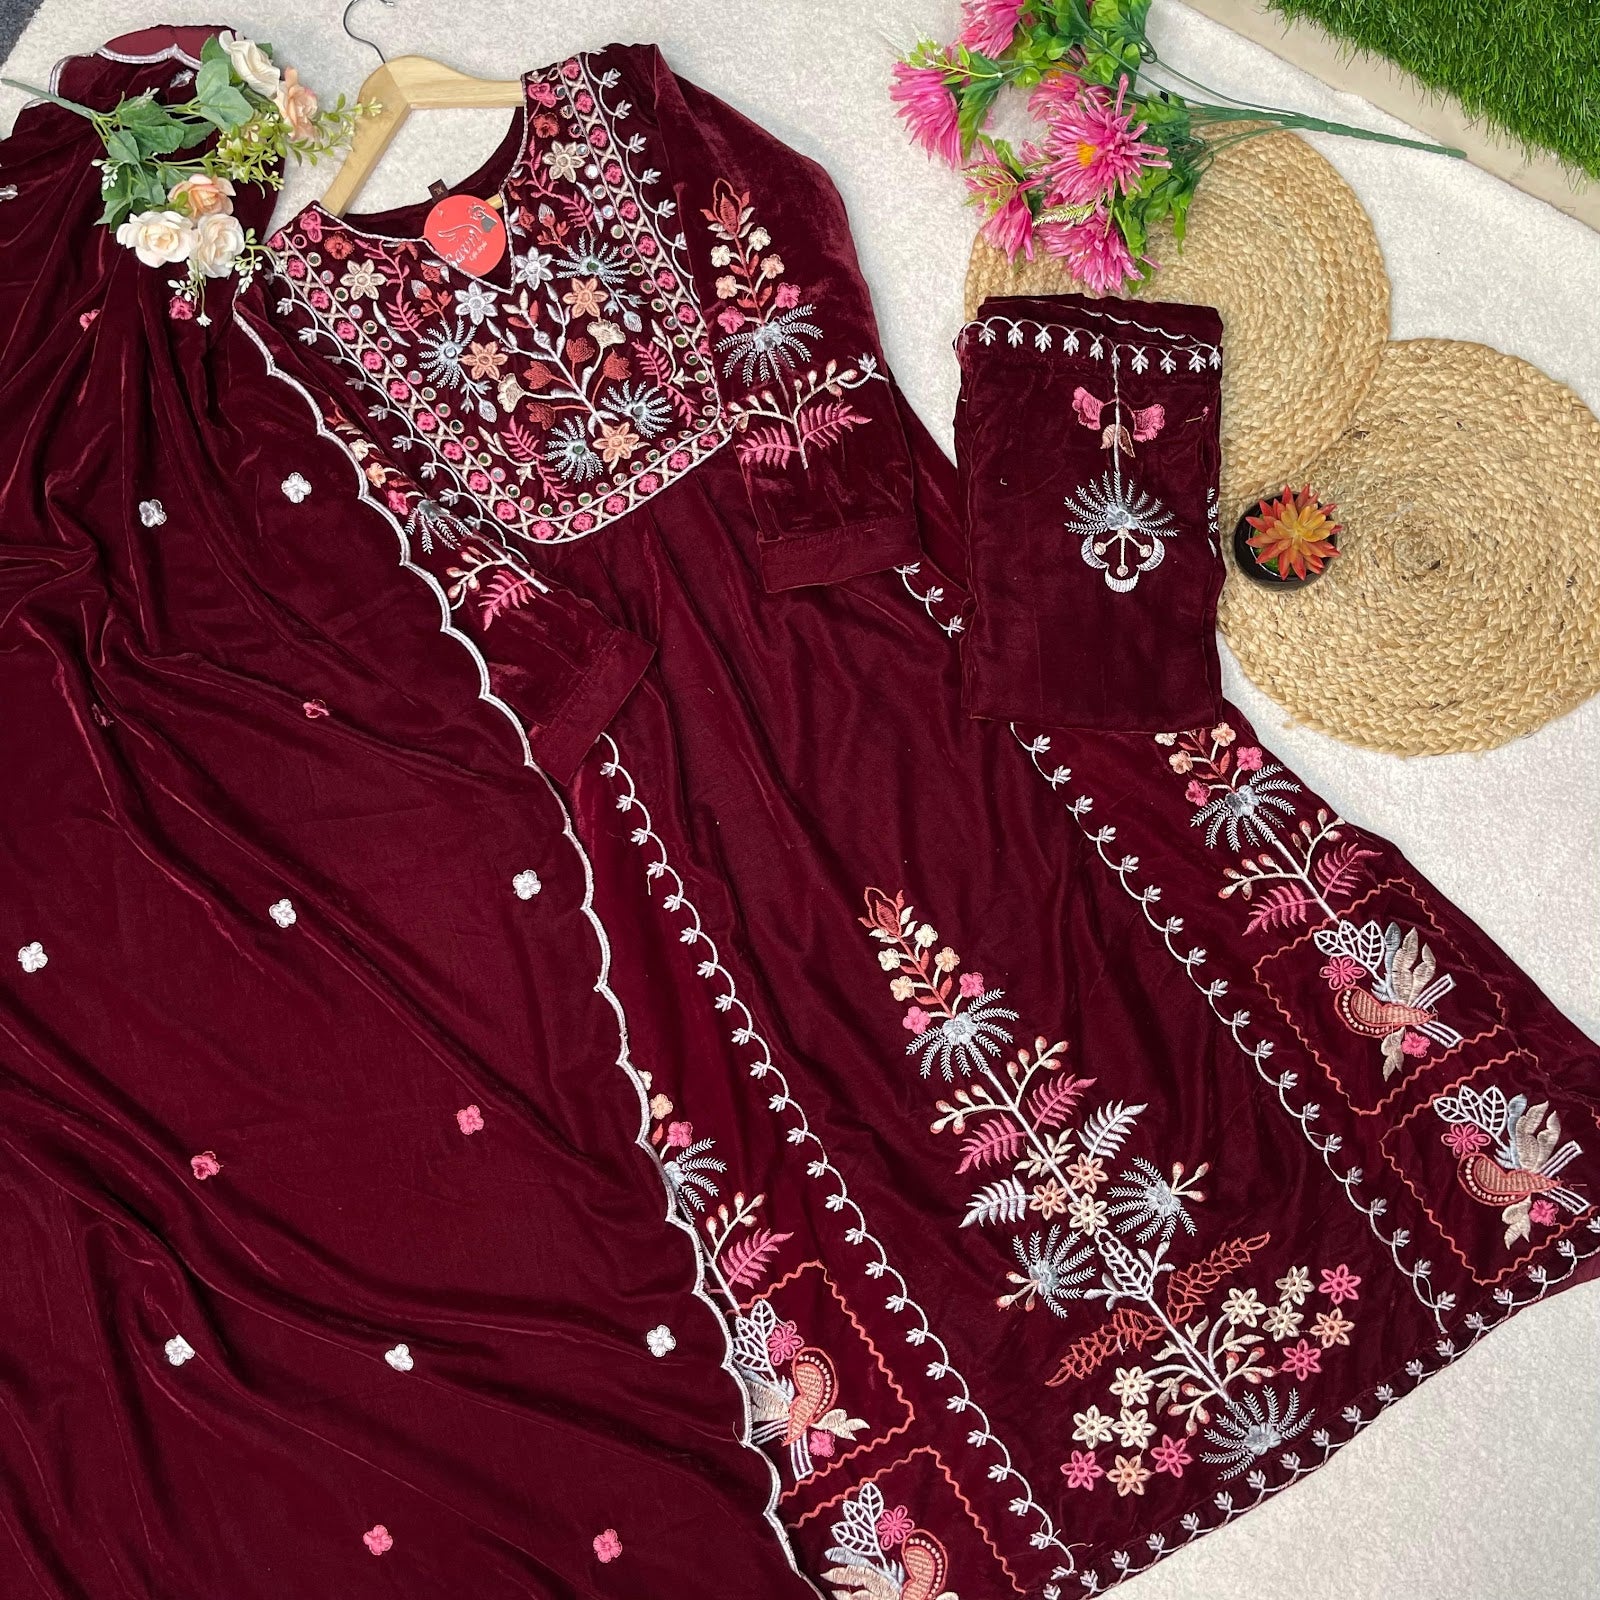 Kasida Afsana Readymade Velvet Suits